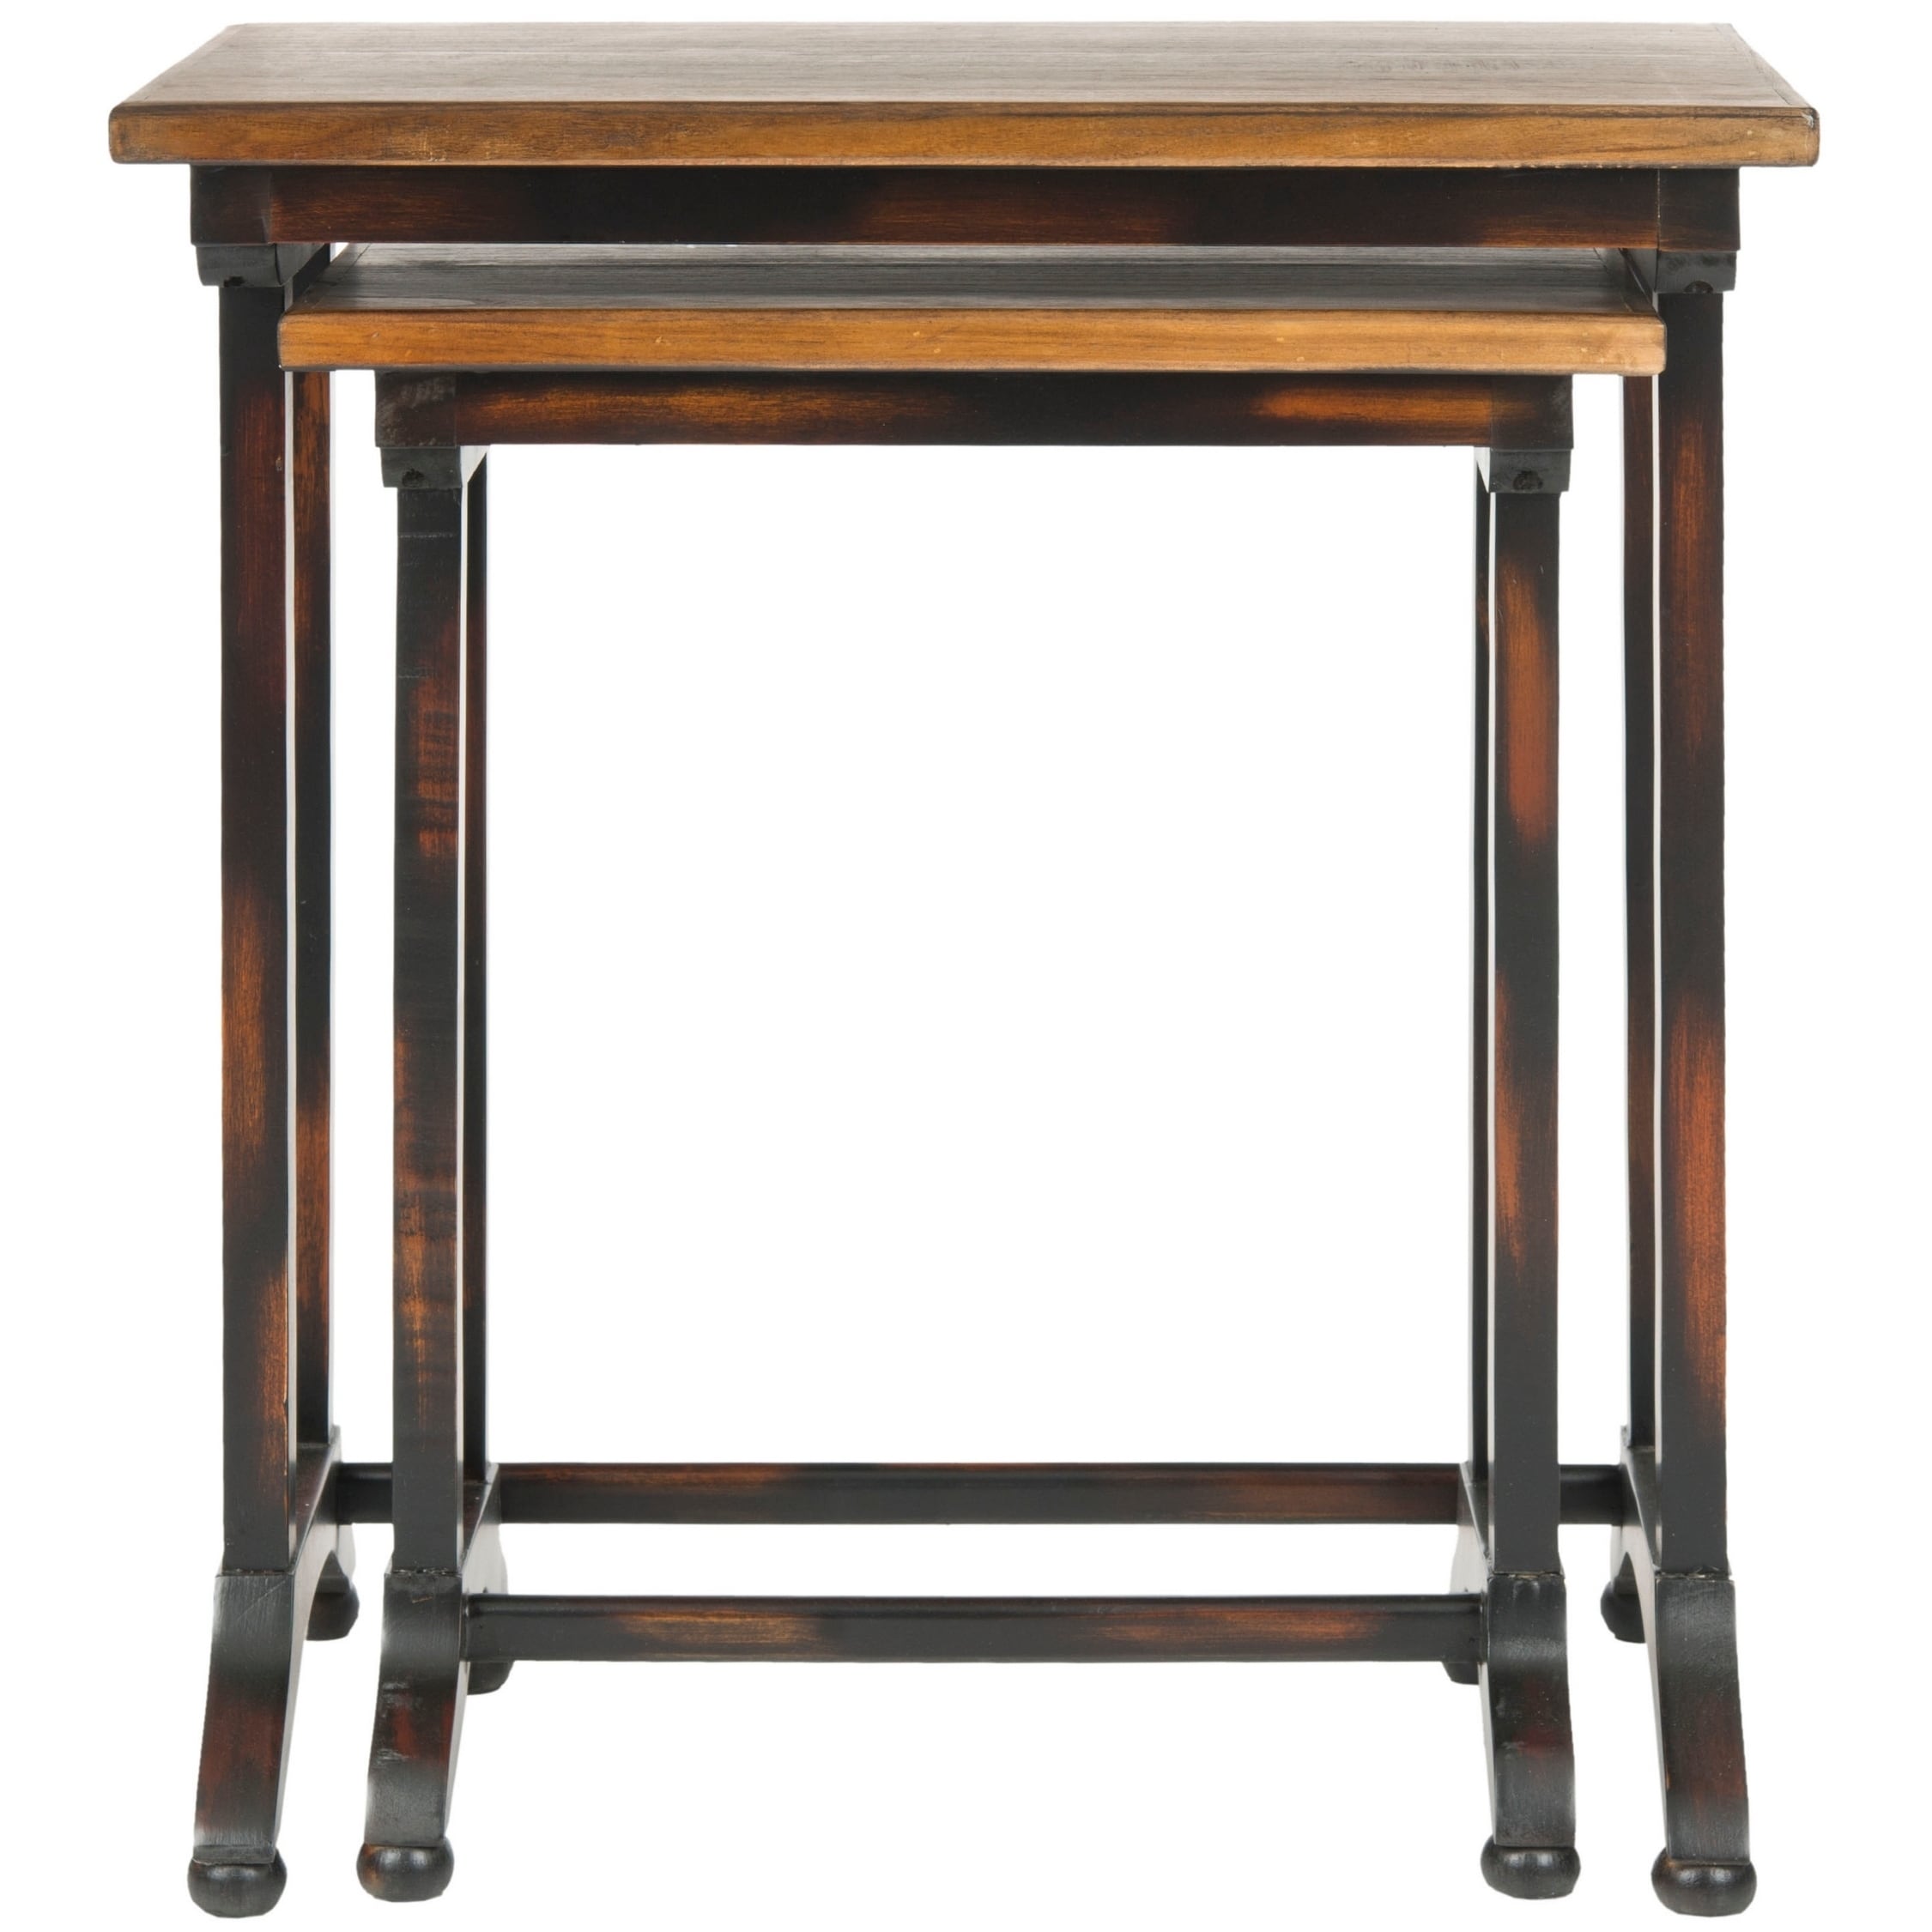 black oak brown nesting tables set of 2 compare $ 249 95 sale $ 137 69